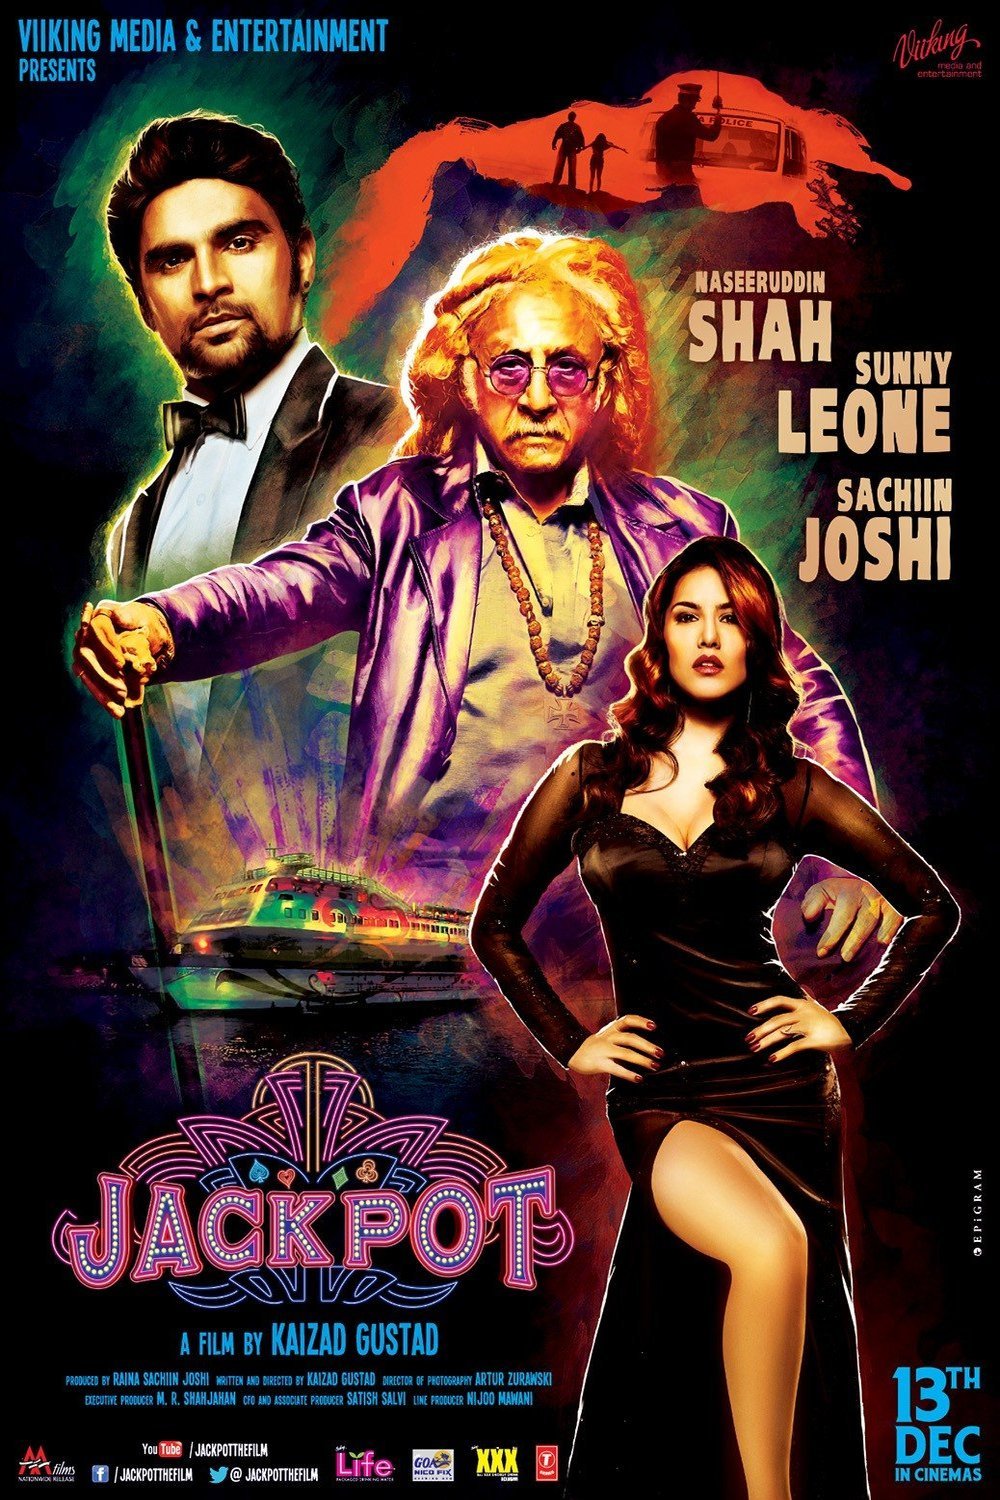 Hindi poster of the movie Jackpot